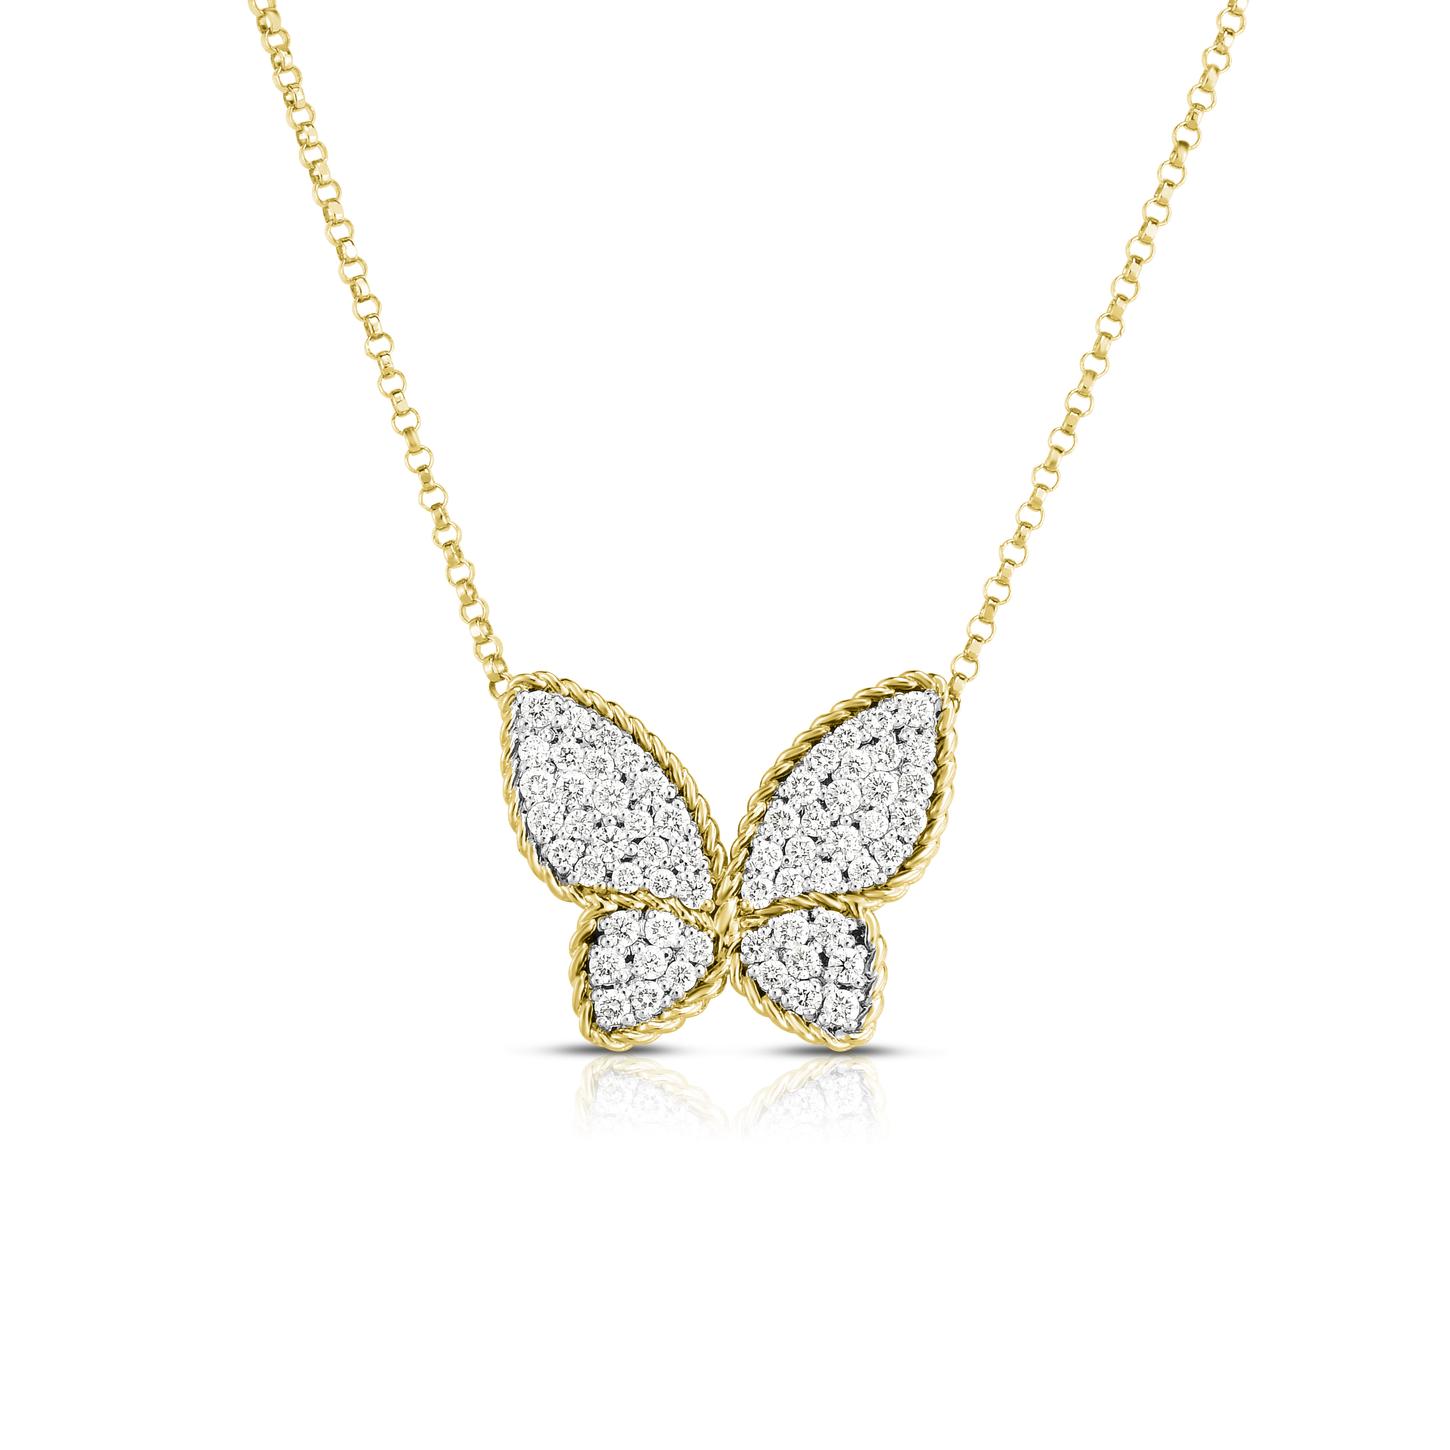 Roberto Coin 18k Pave Diamond Butterfly Necklace 0